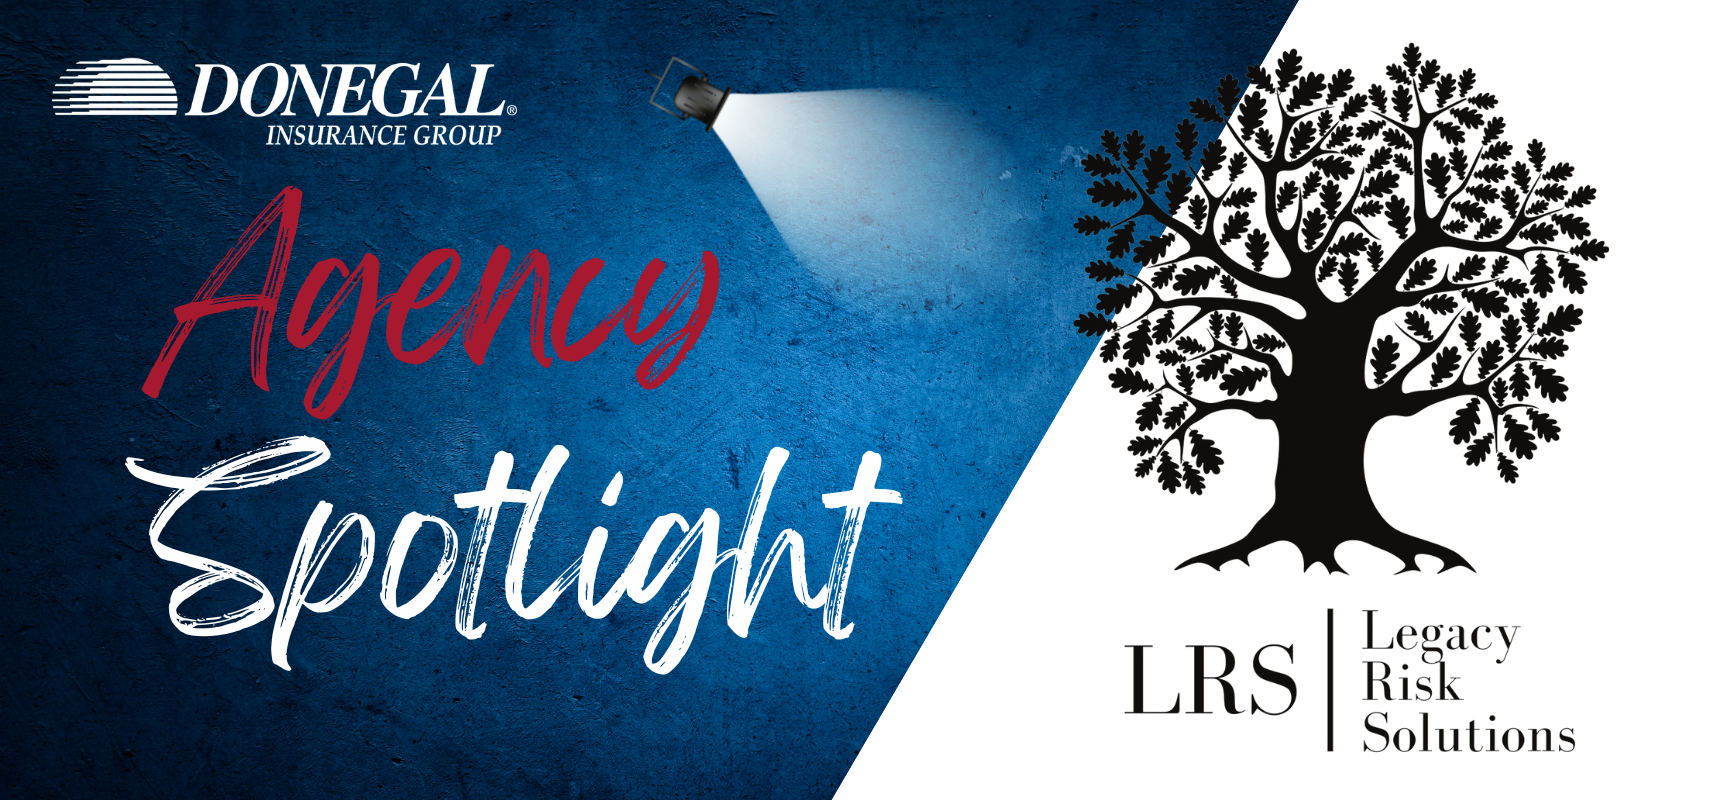 Agency Spotlight Legacy Risk